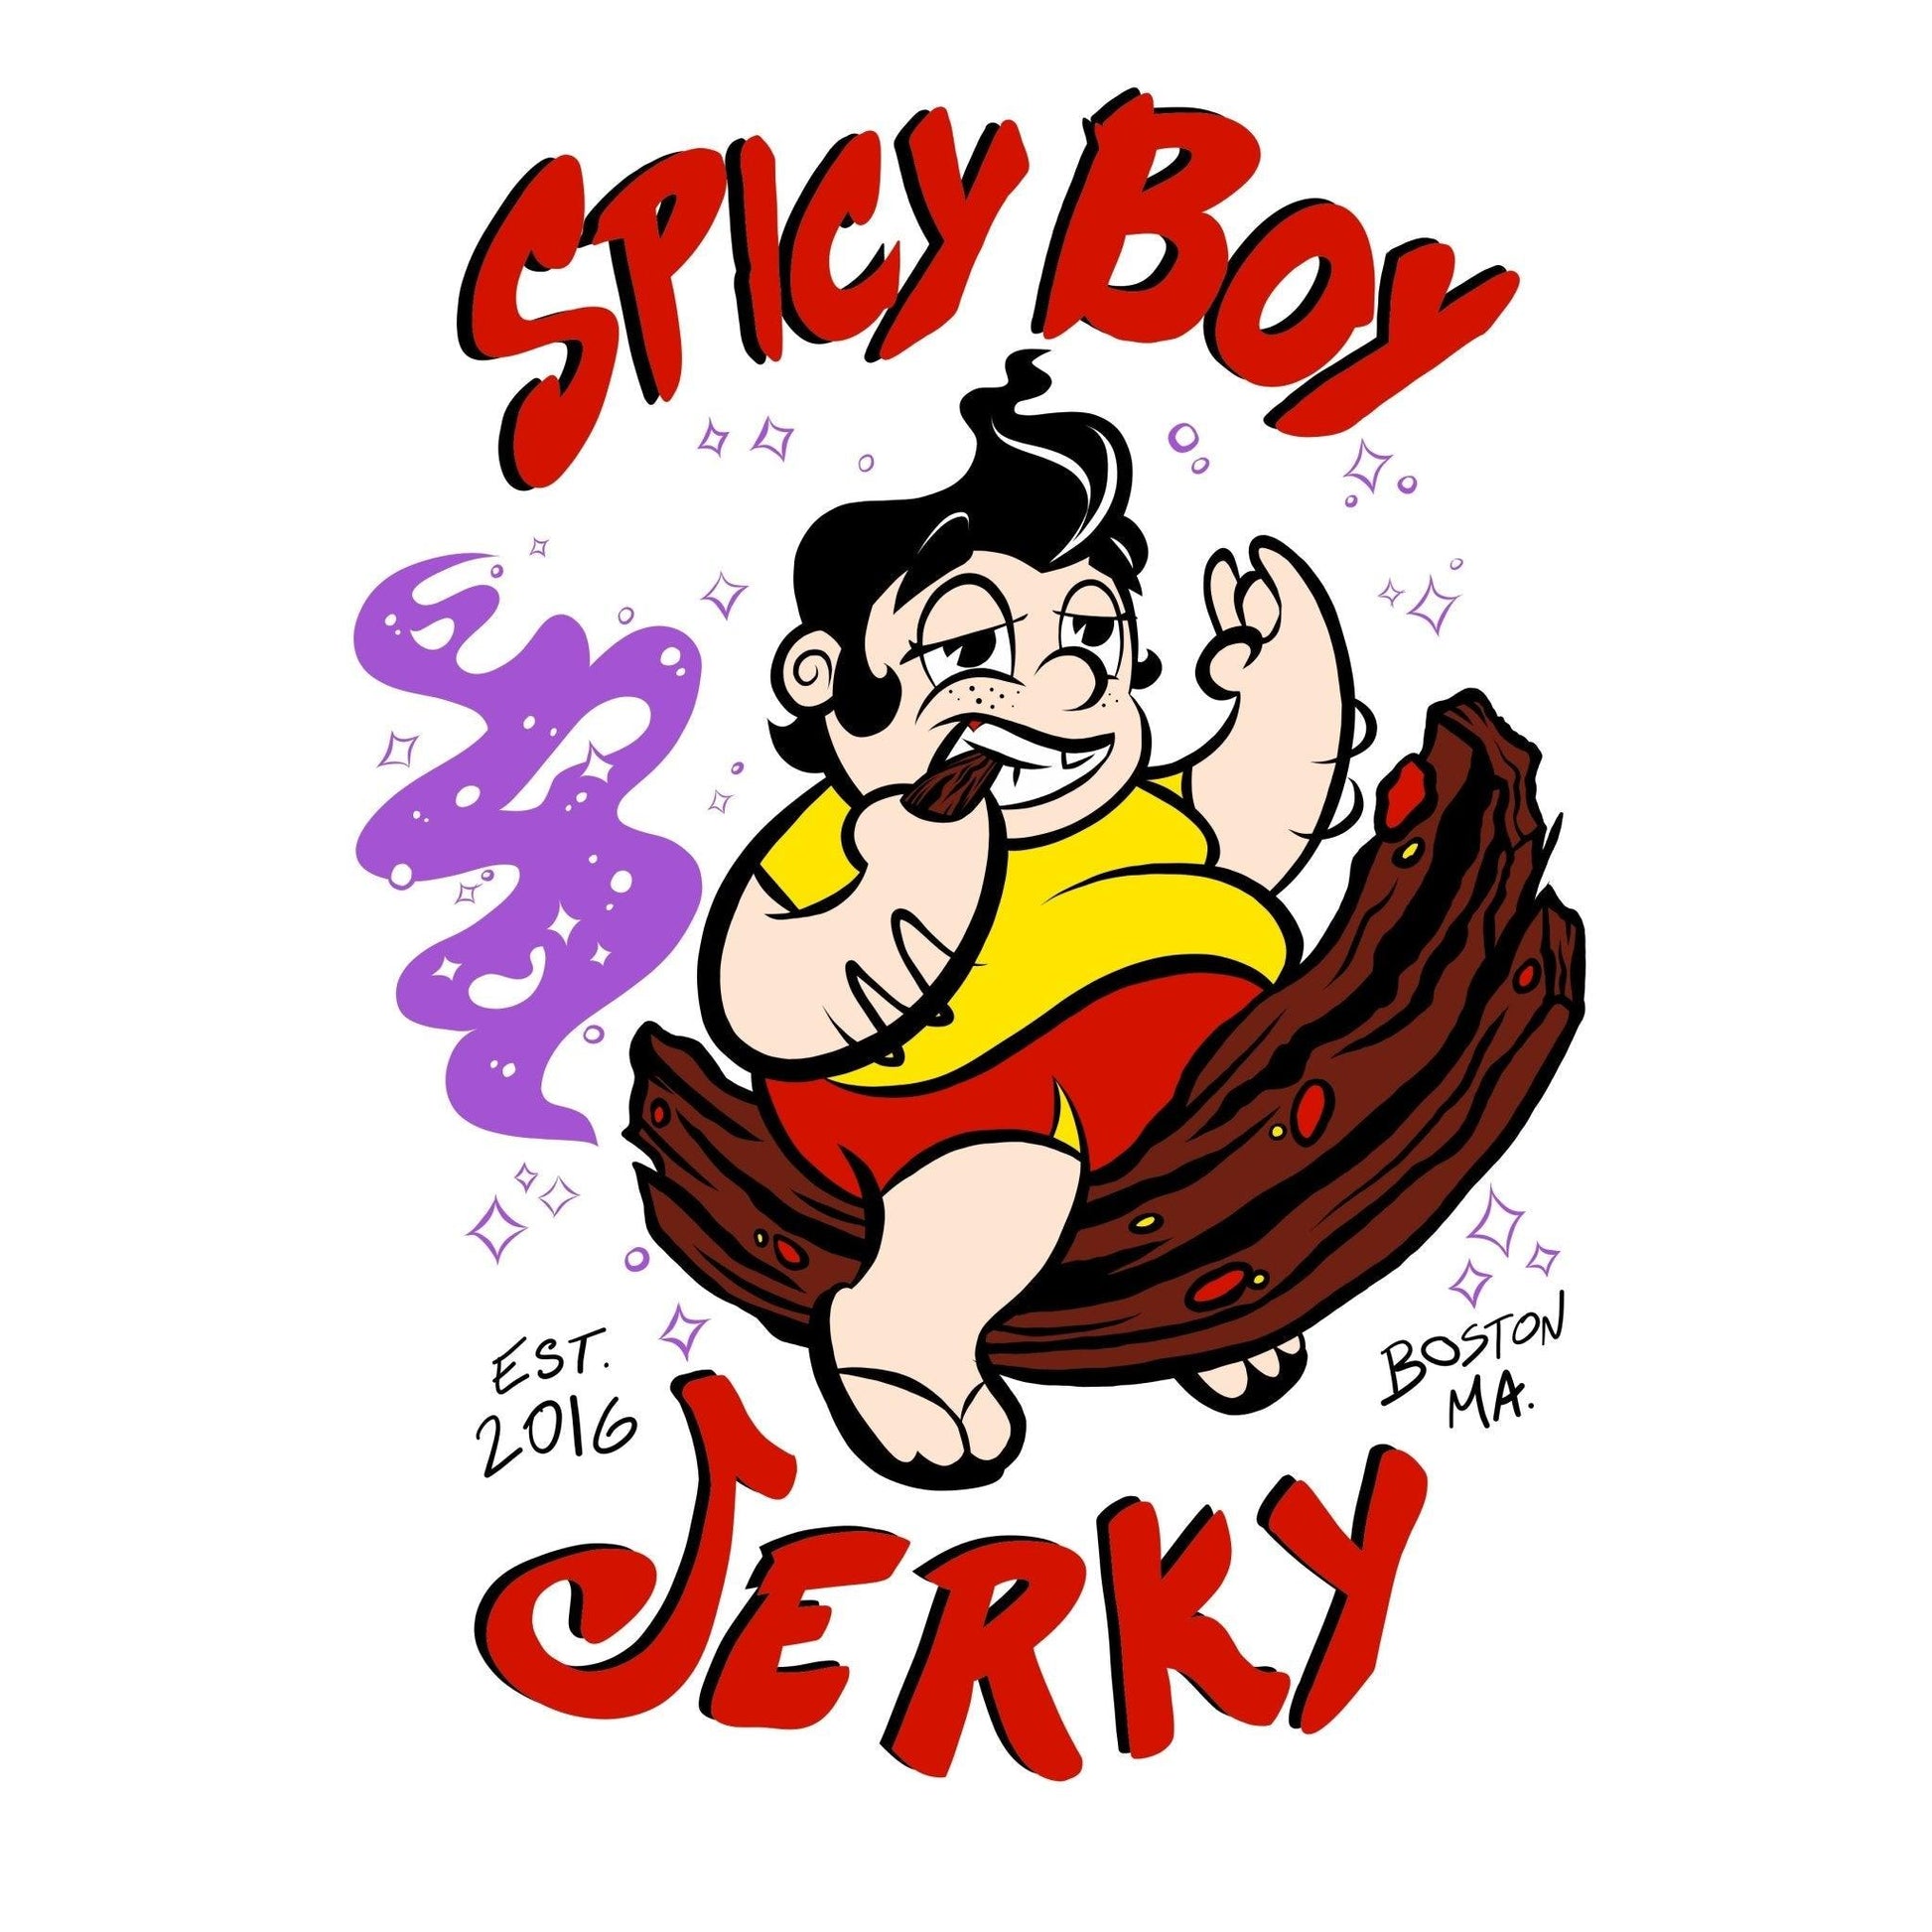 Best Sellers Sampler - Spicy Boy Jerky